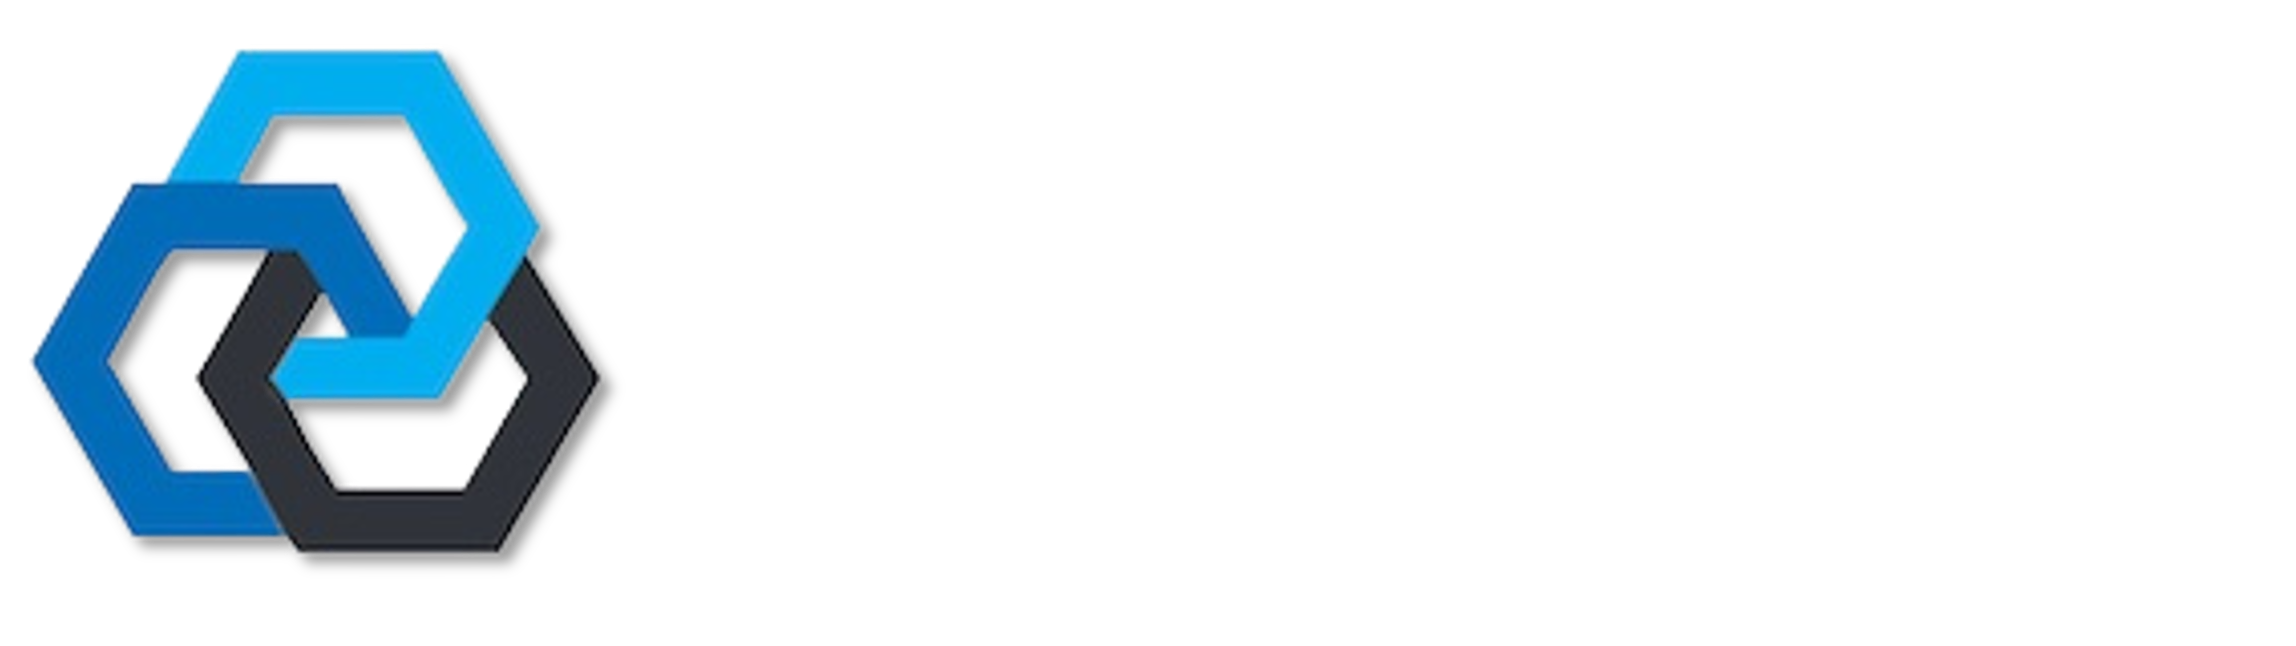 Datenschutz Consulting Dresden